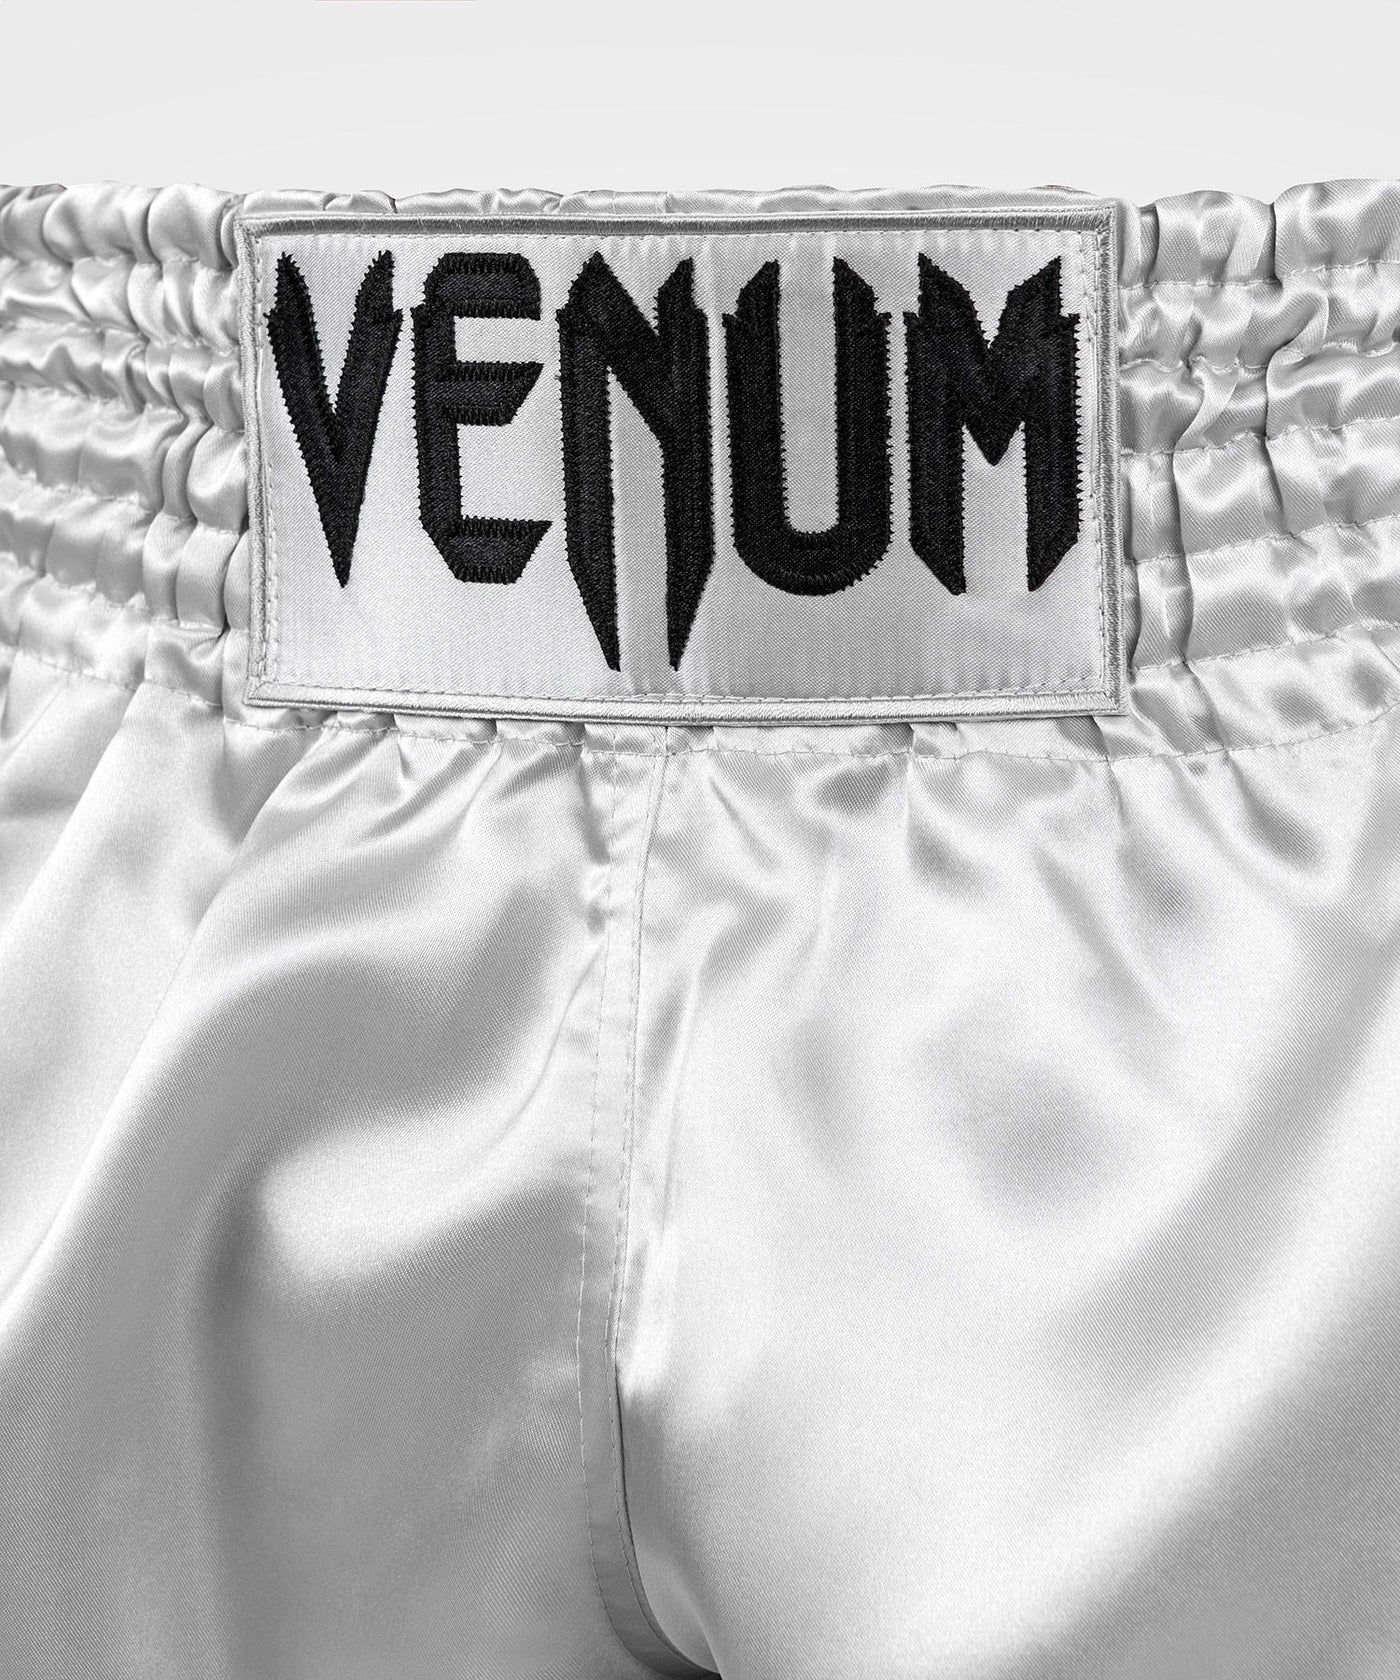 מכנסי איגרוף תאילנדי  Venum Classic Muay Thai Shorts Silver/Black XL